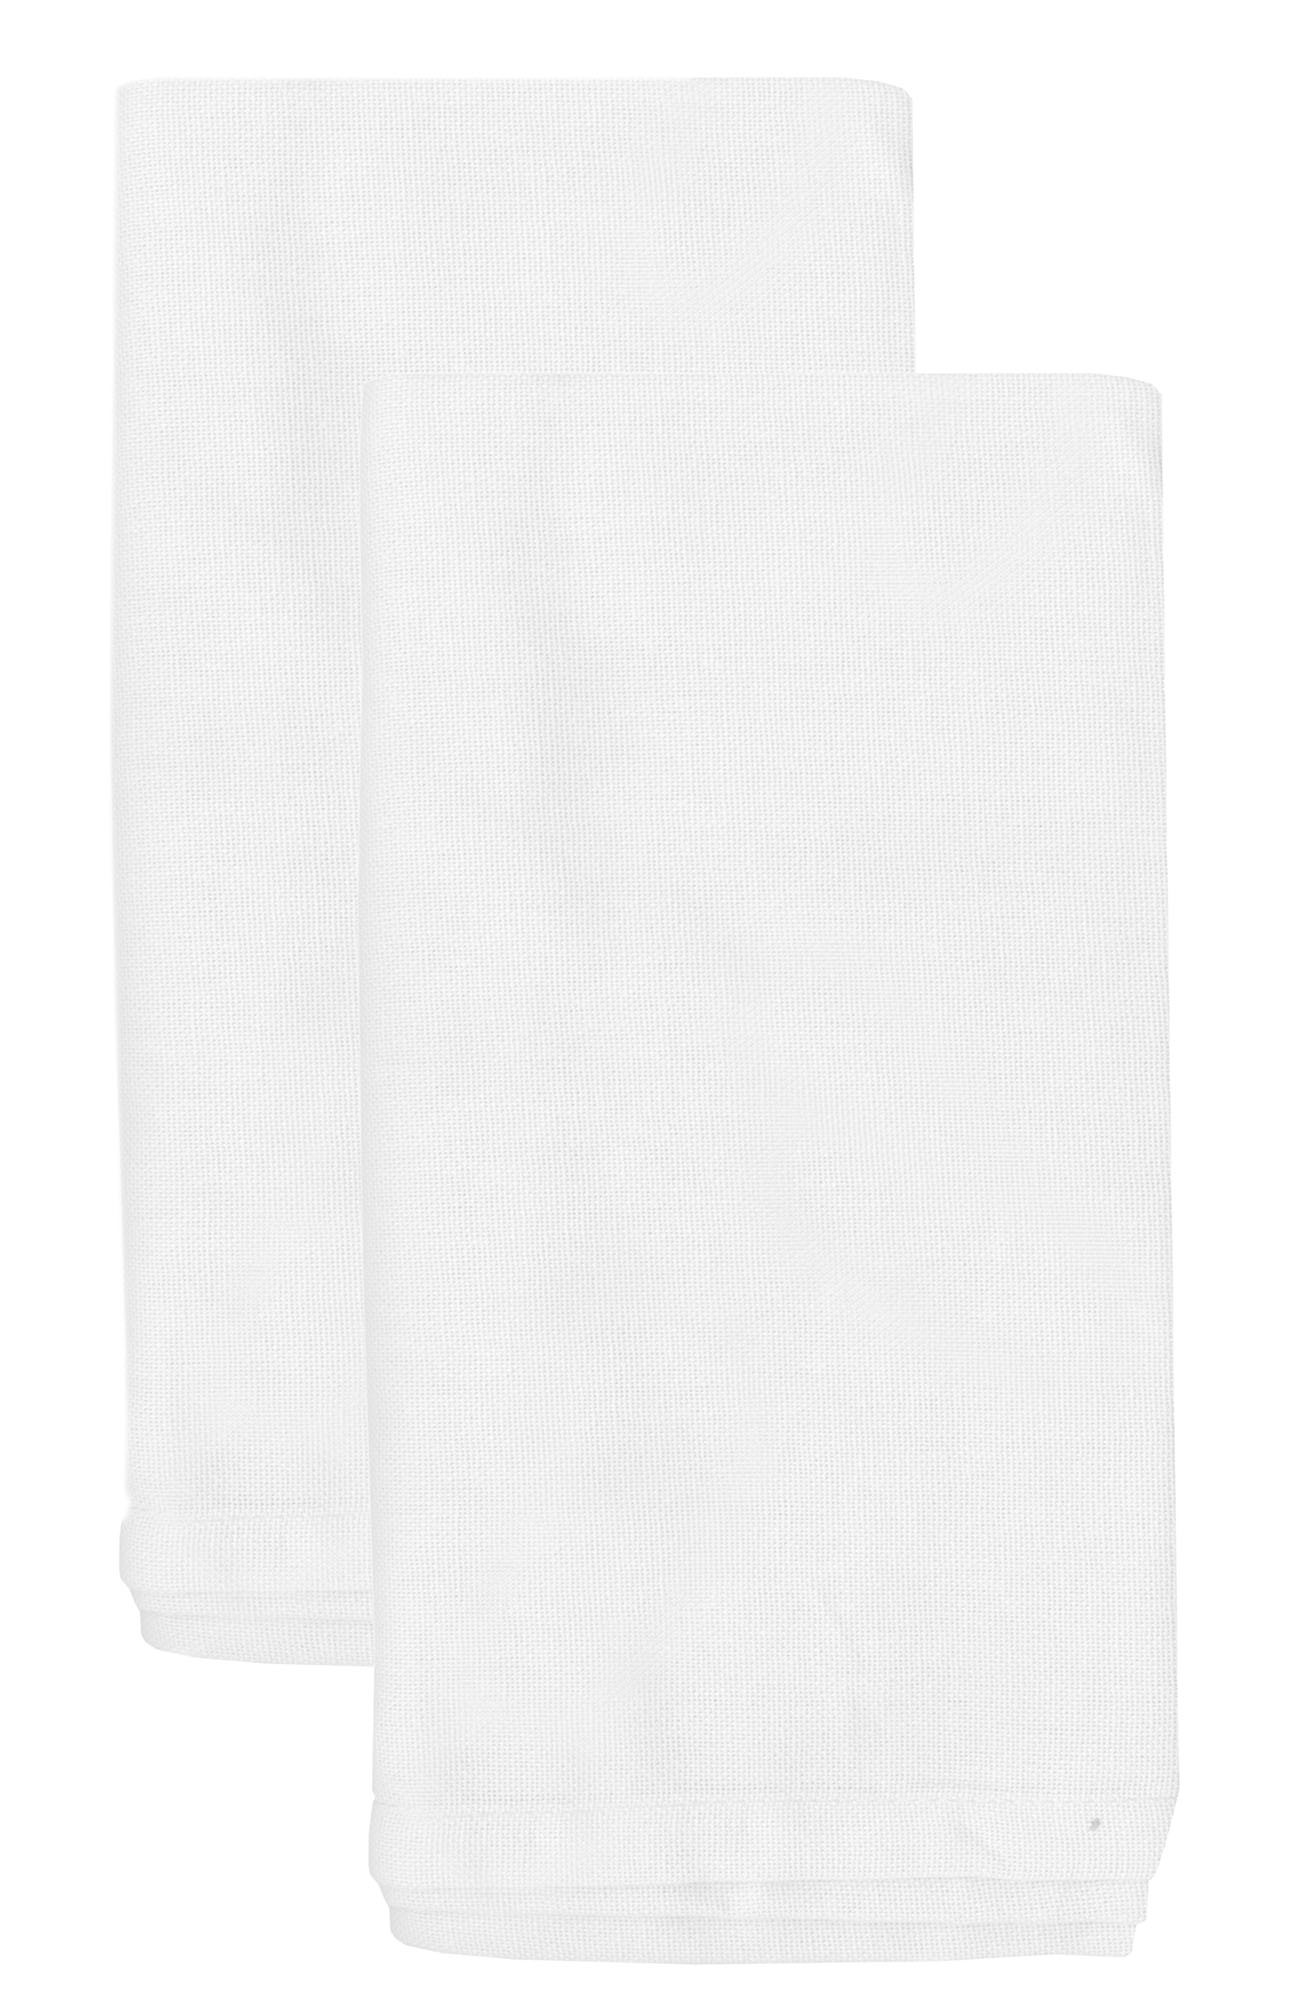 Aunt Martha's 100% Cotton 18"x 28" Green Striped Towels flour sack feedsack 